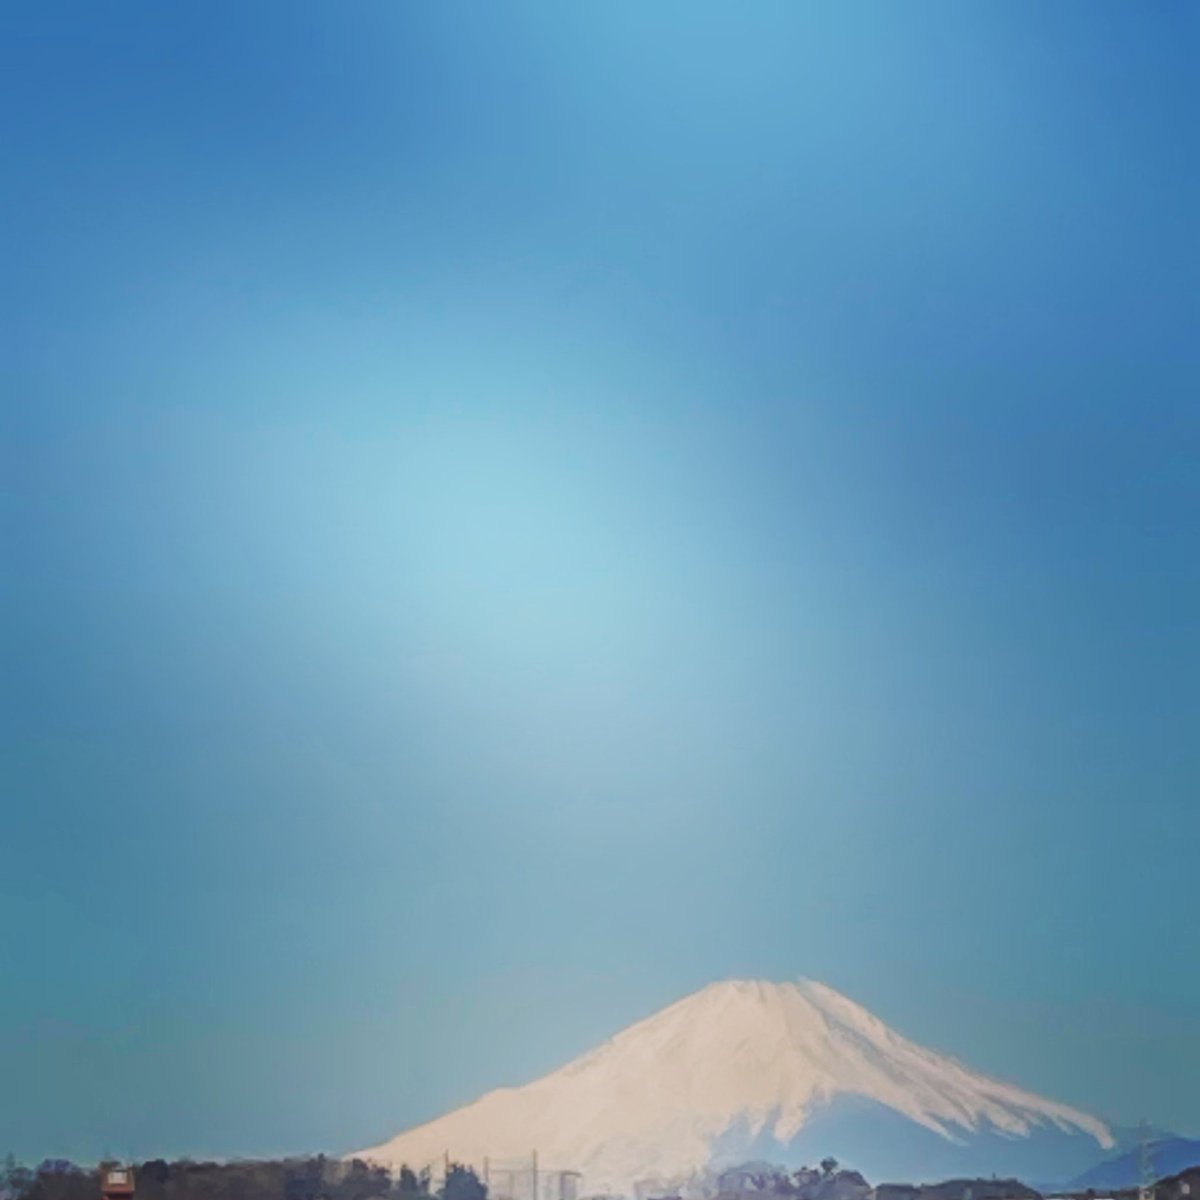 cloudless blue 
#goodmorning  #monday
#mtfuji  #mtfujiphoto_ig 
#frommywindow 
#富士山　#いまそら　#冬景色